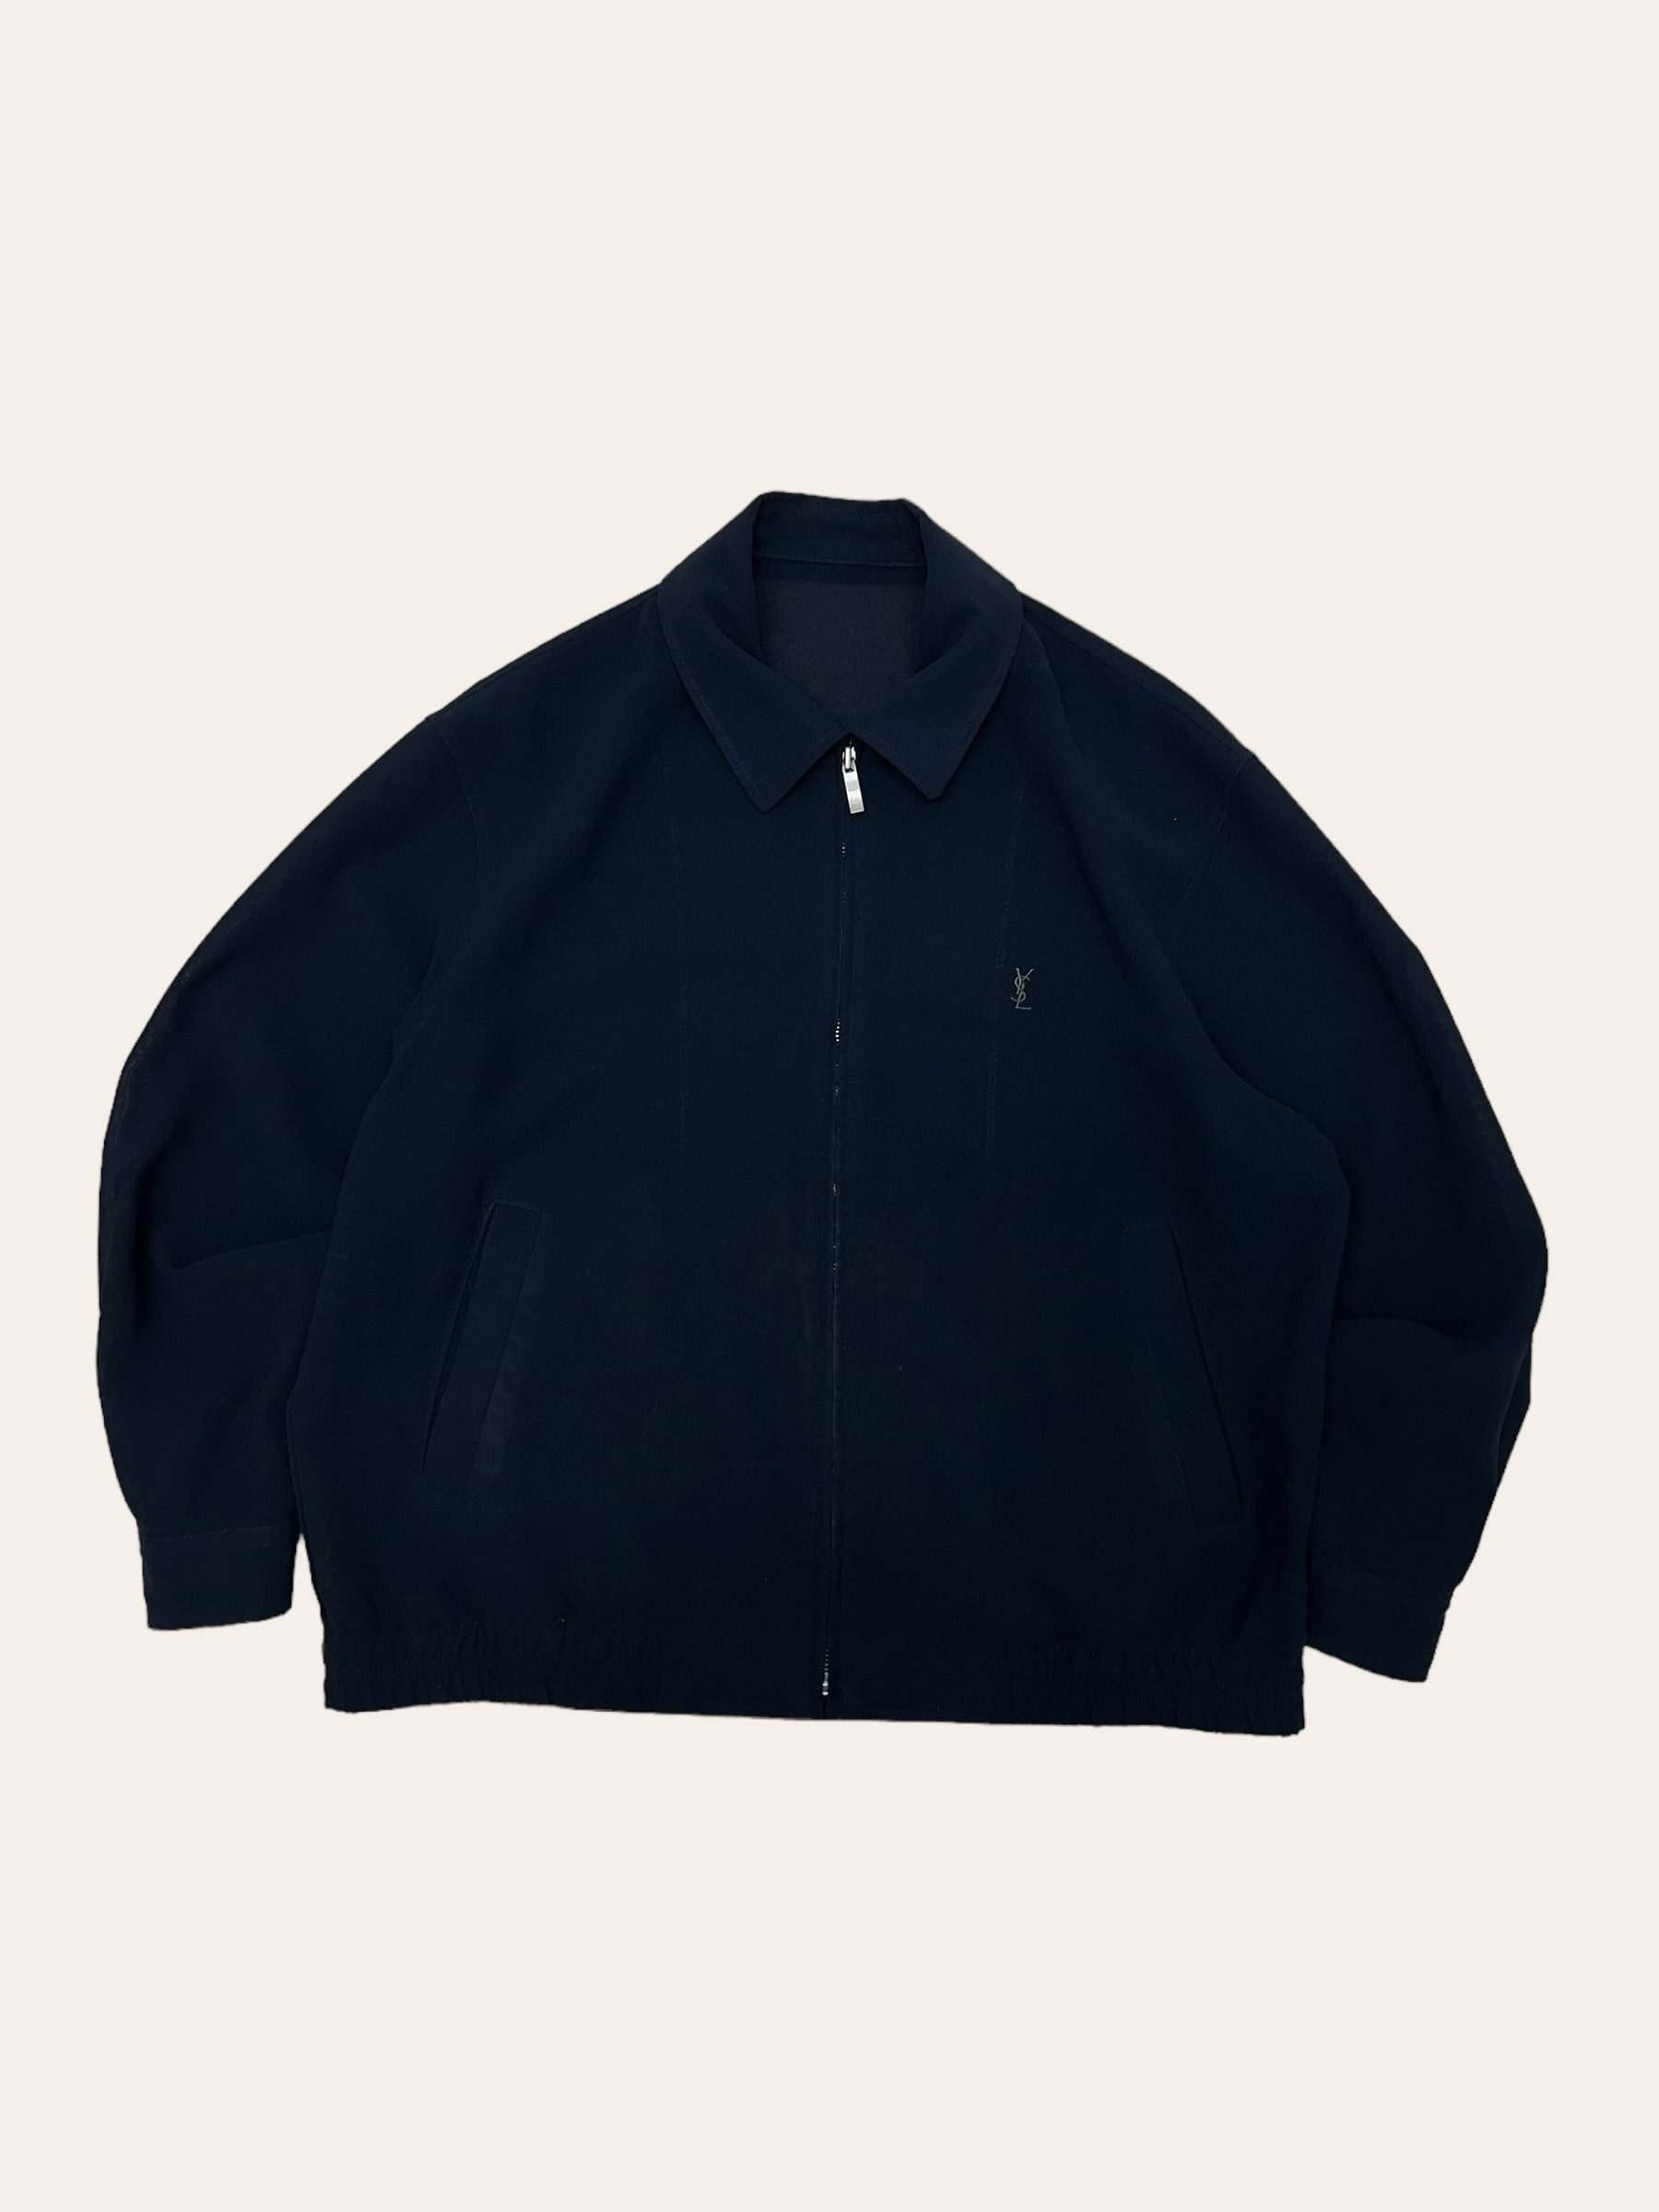 YSL navy lightweight blouson jacket 100